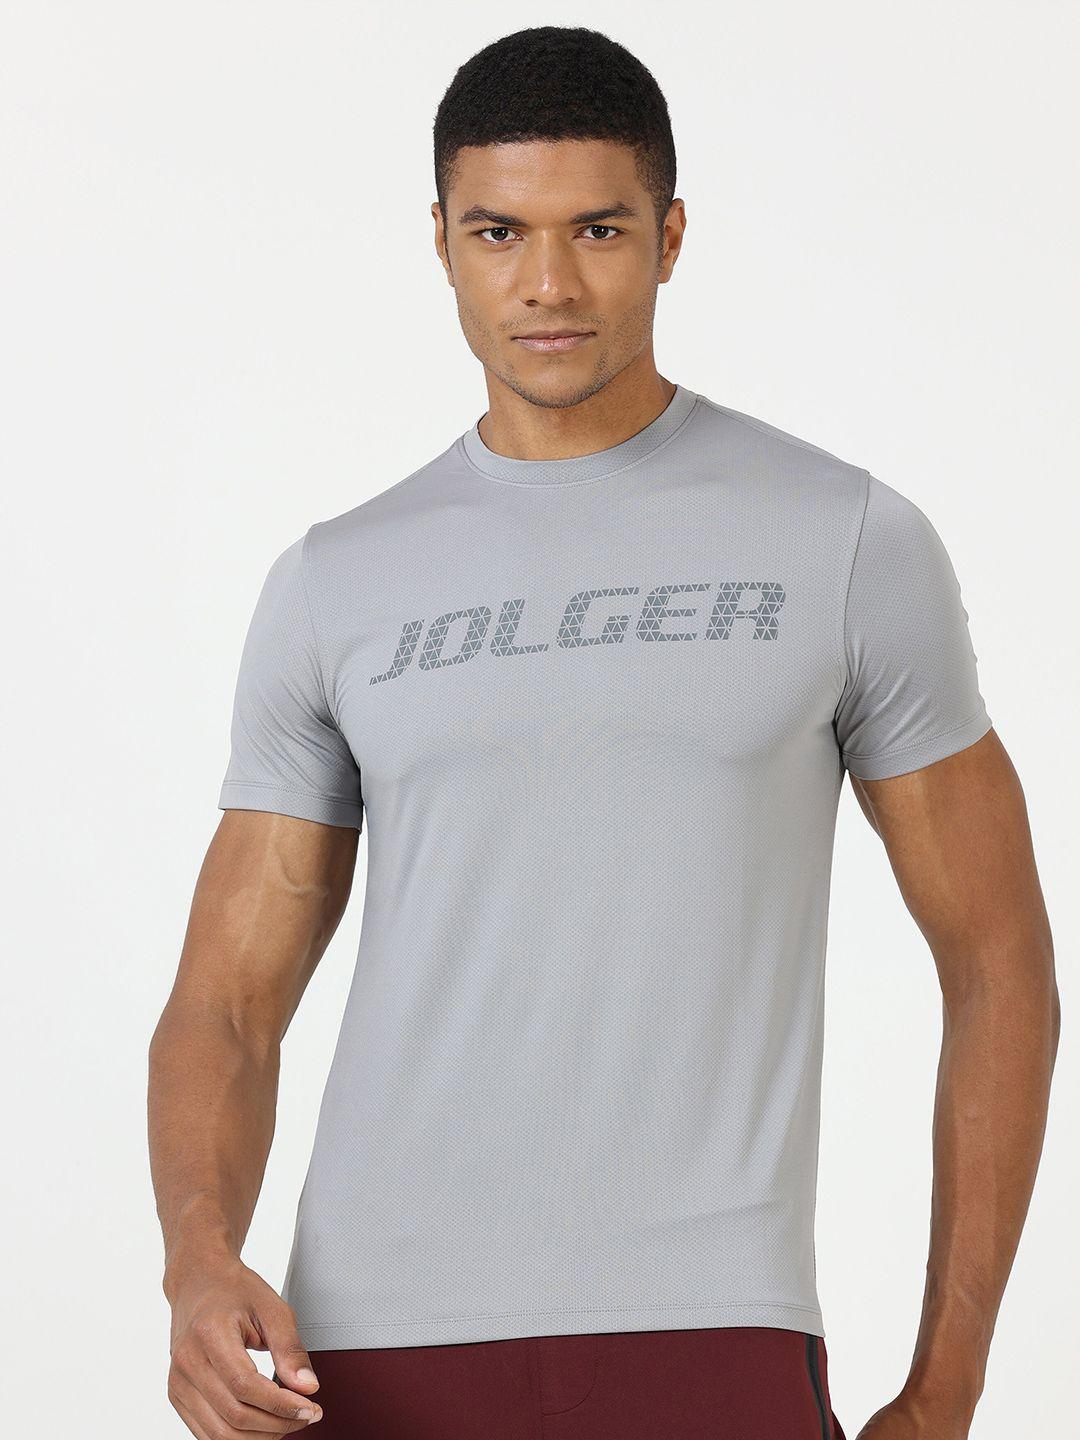 jolger typography printed rapid dry slim fit sports t-shirt